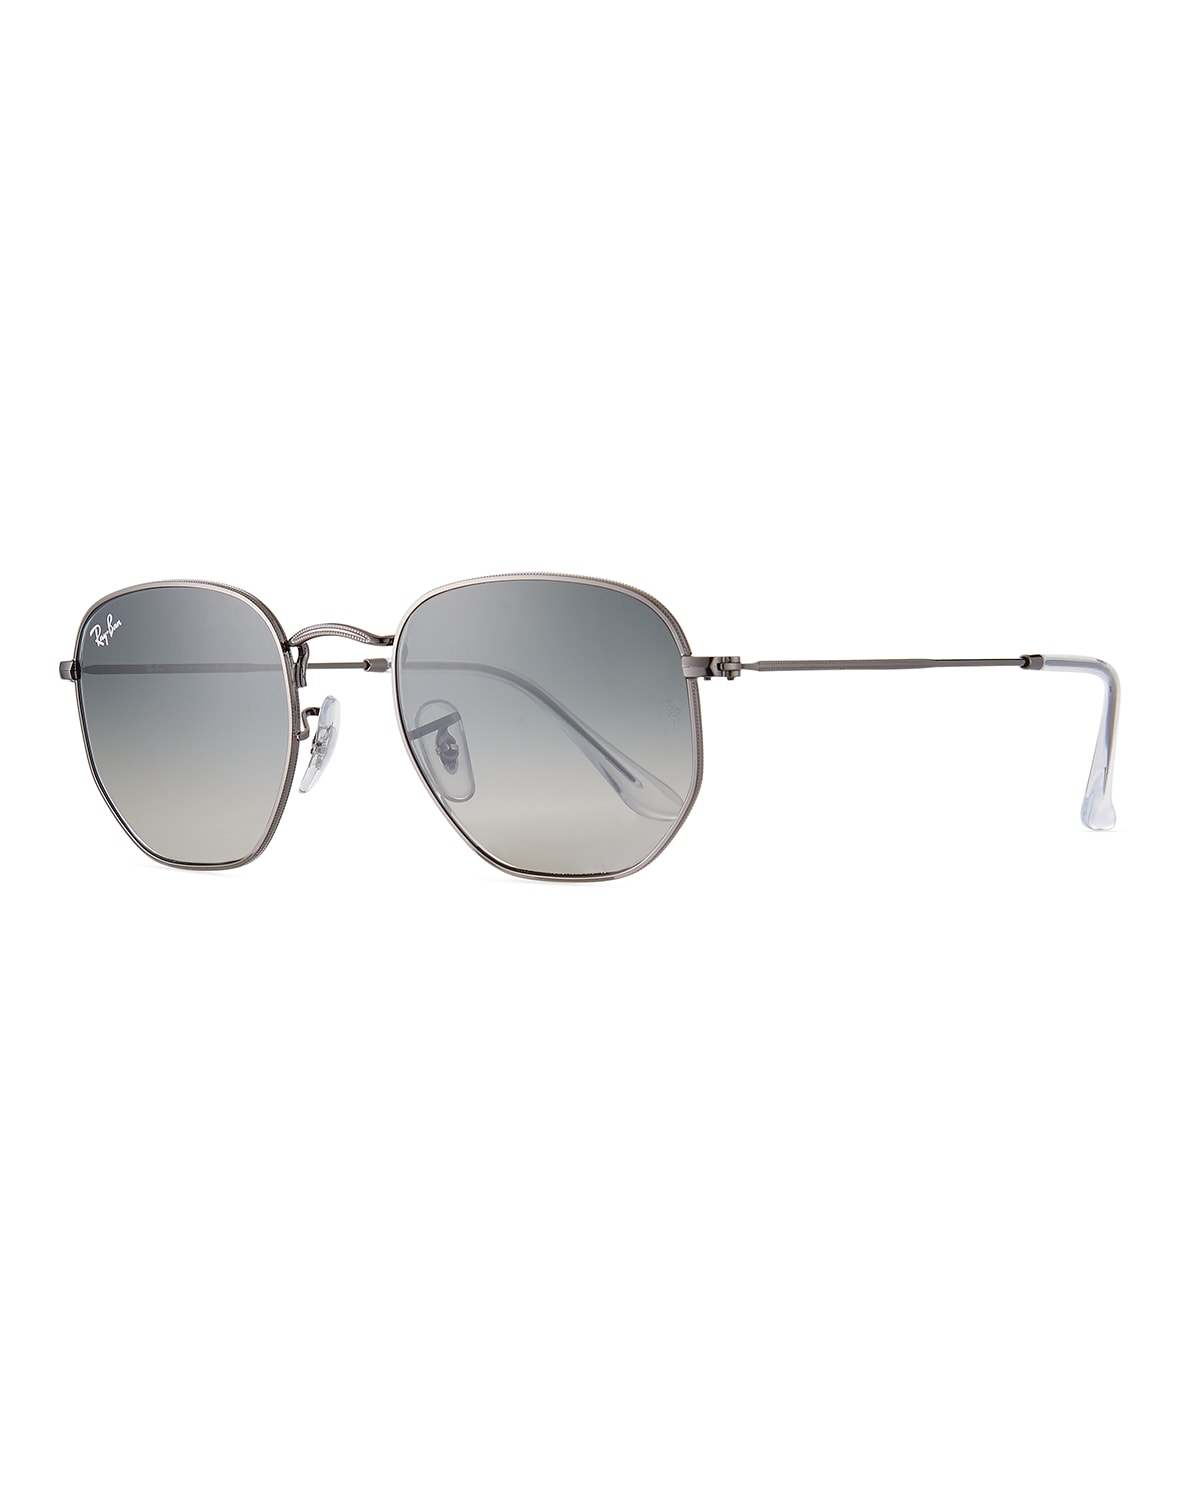 Ray Ban Square Steel Monochromatic Sunglasses In Gunmetal